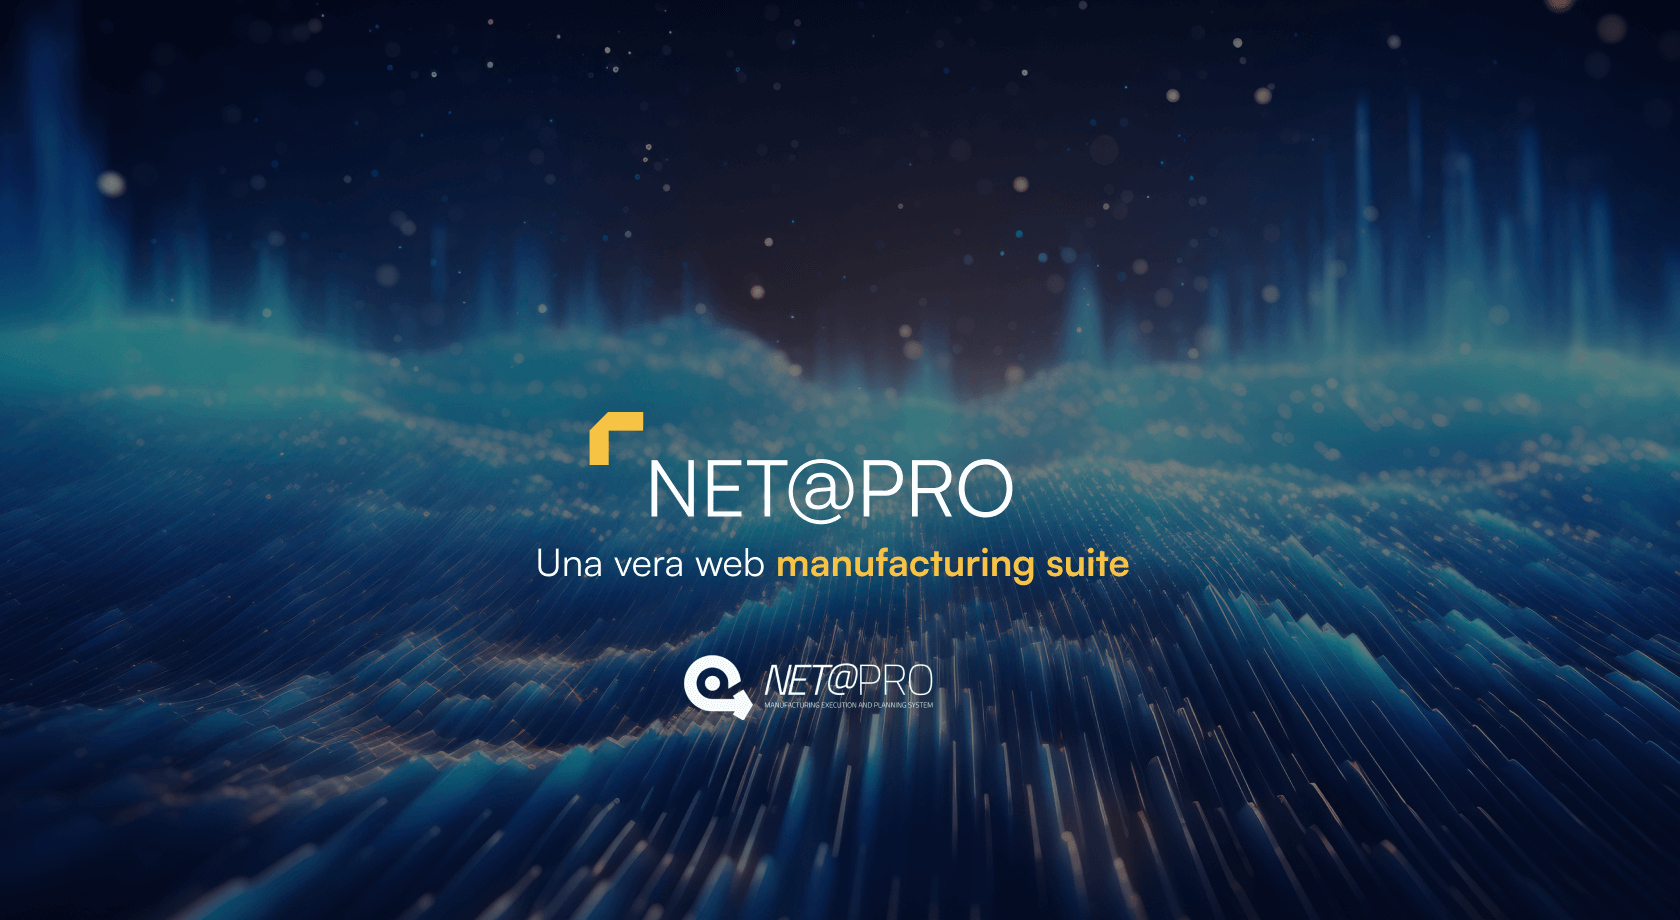 NET@PRO, una vera web manufacturing suite